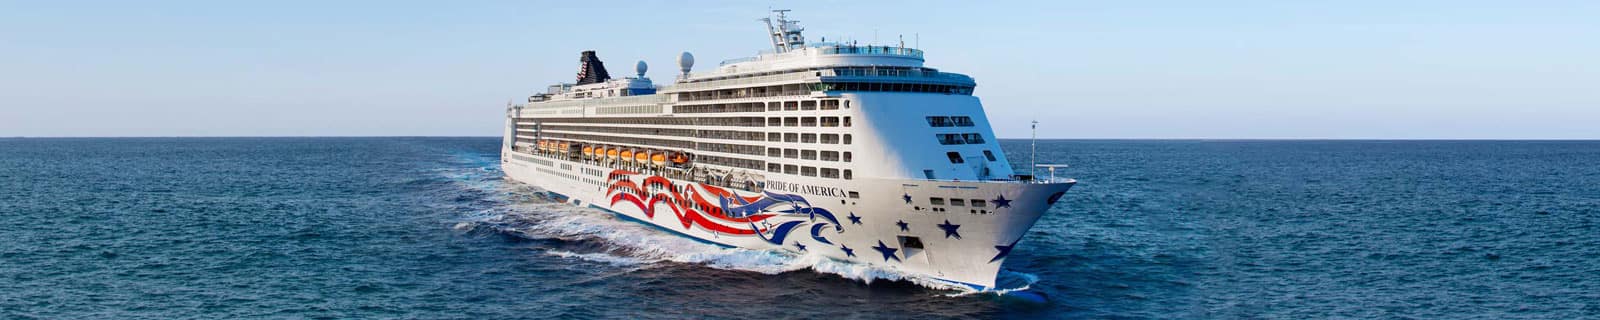 norwegian cruise line (ncl) pride of america